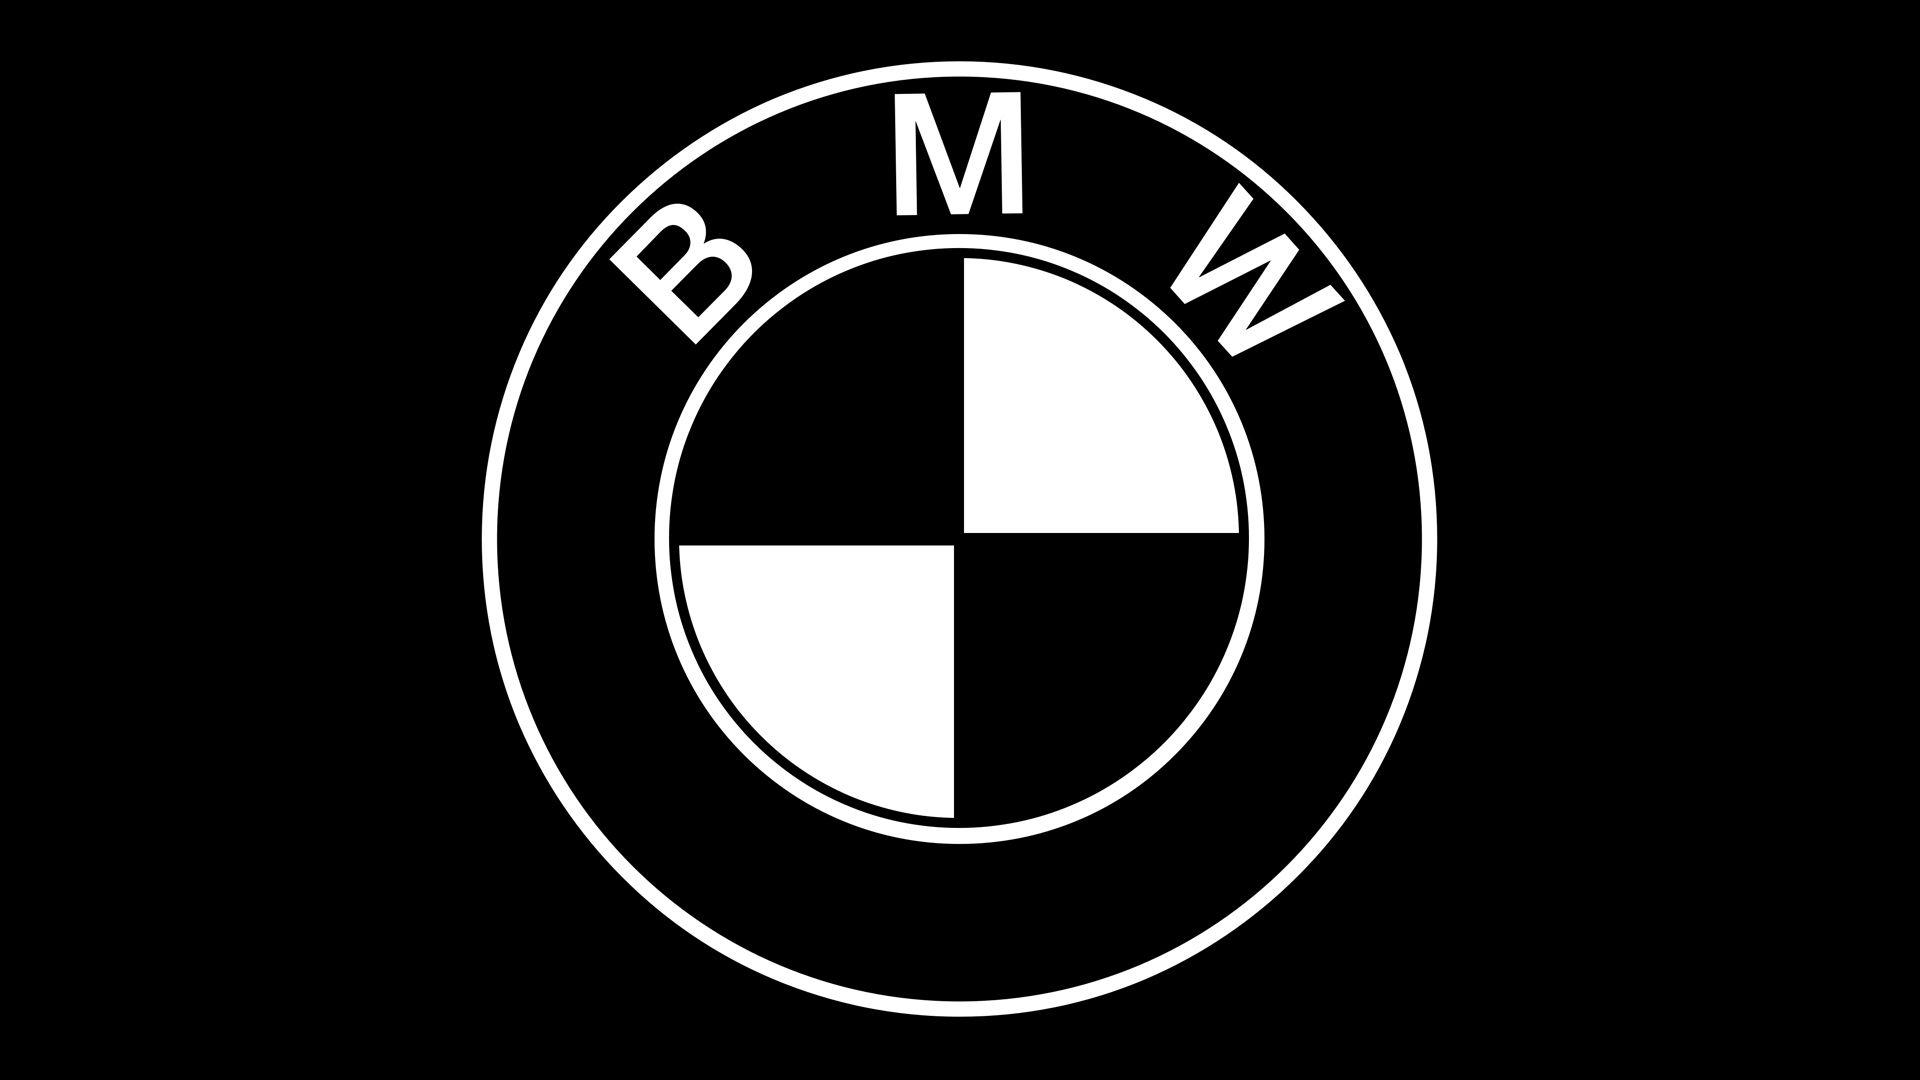 2018 BMW Logo - BMW Logo, BMW Symbol, Meaning, History and Evolution